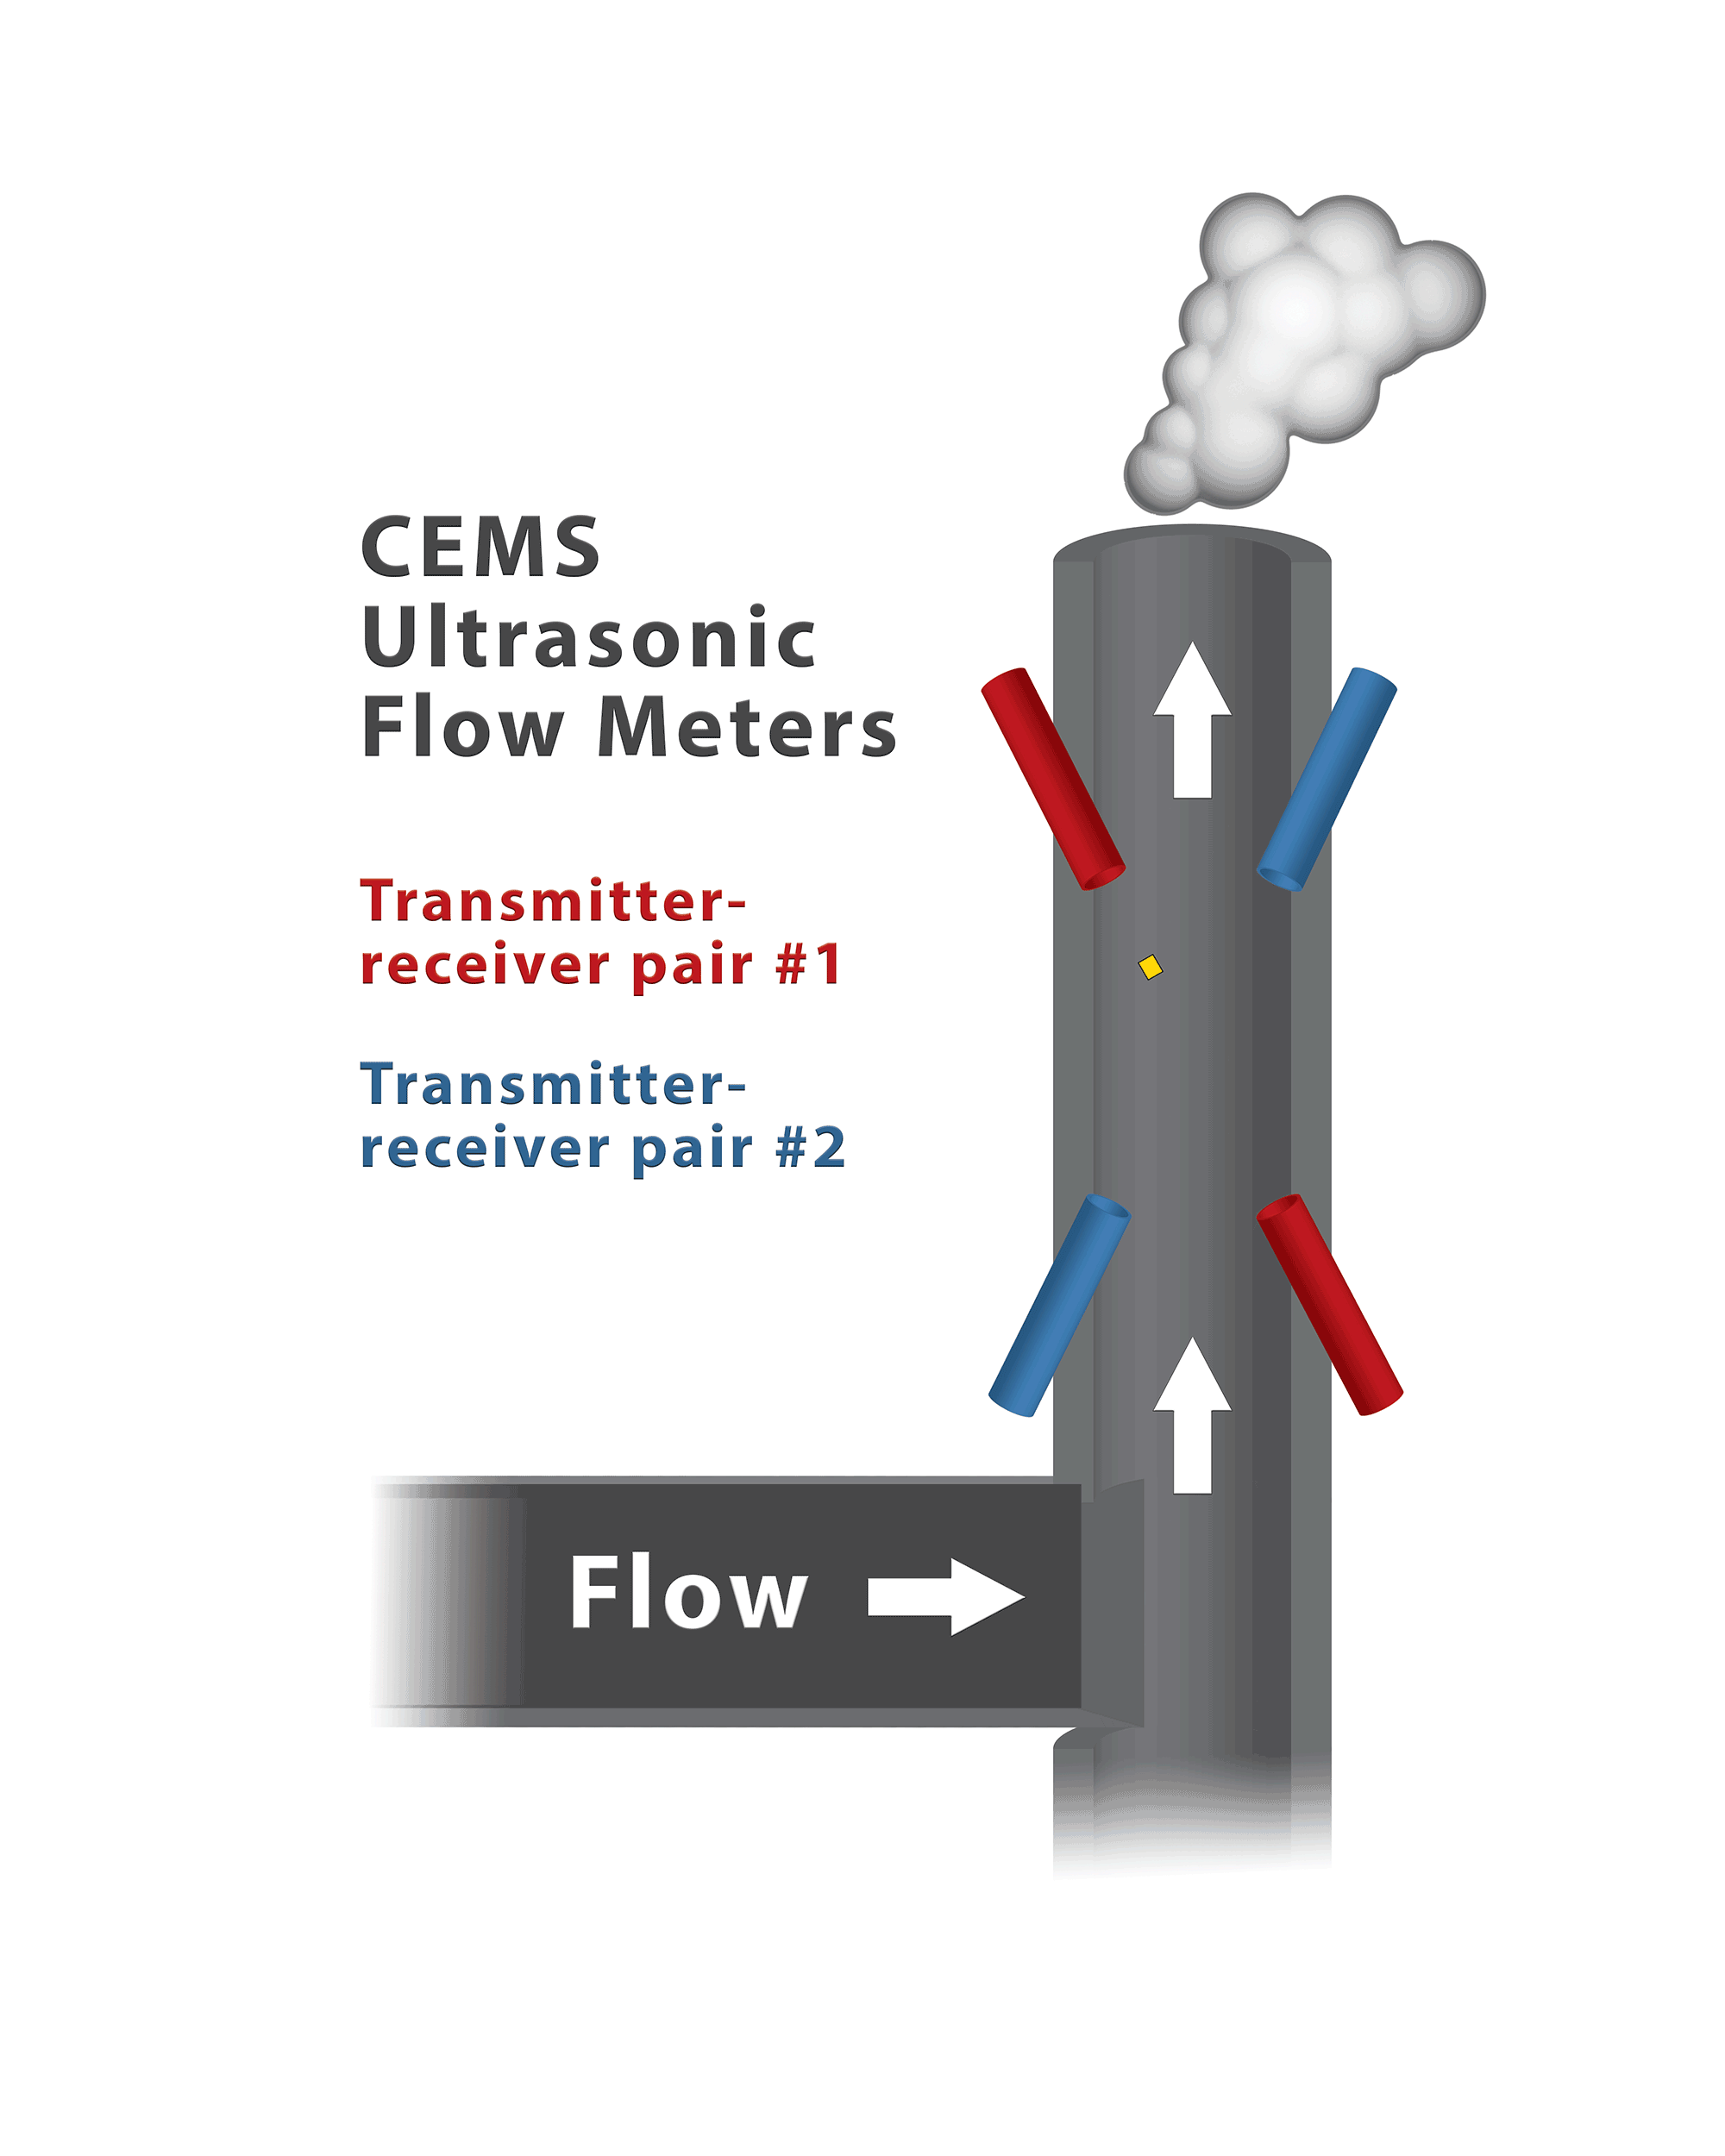 CEMS ultrasonic flow meters